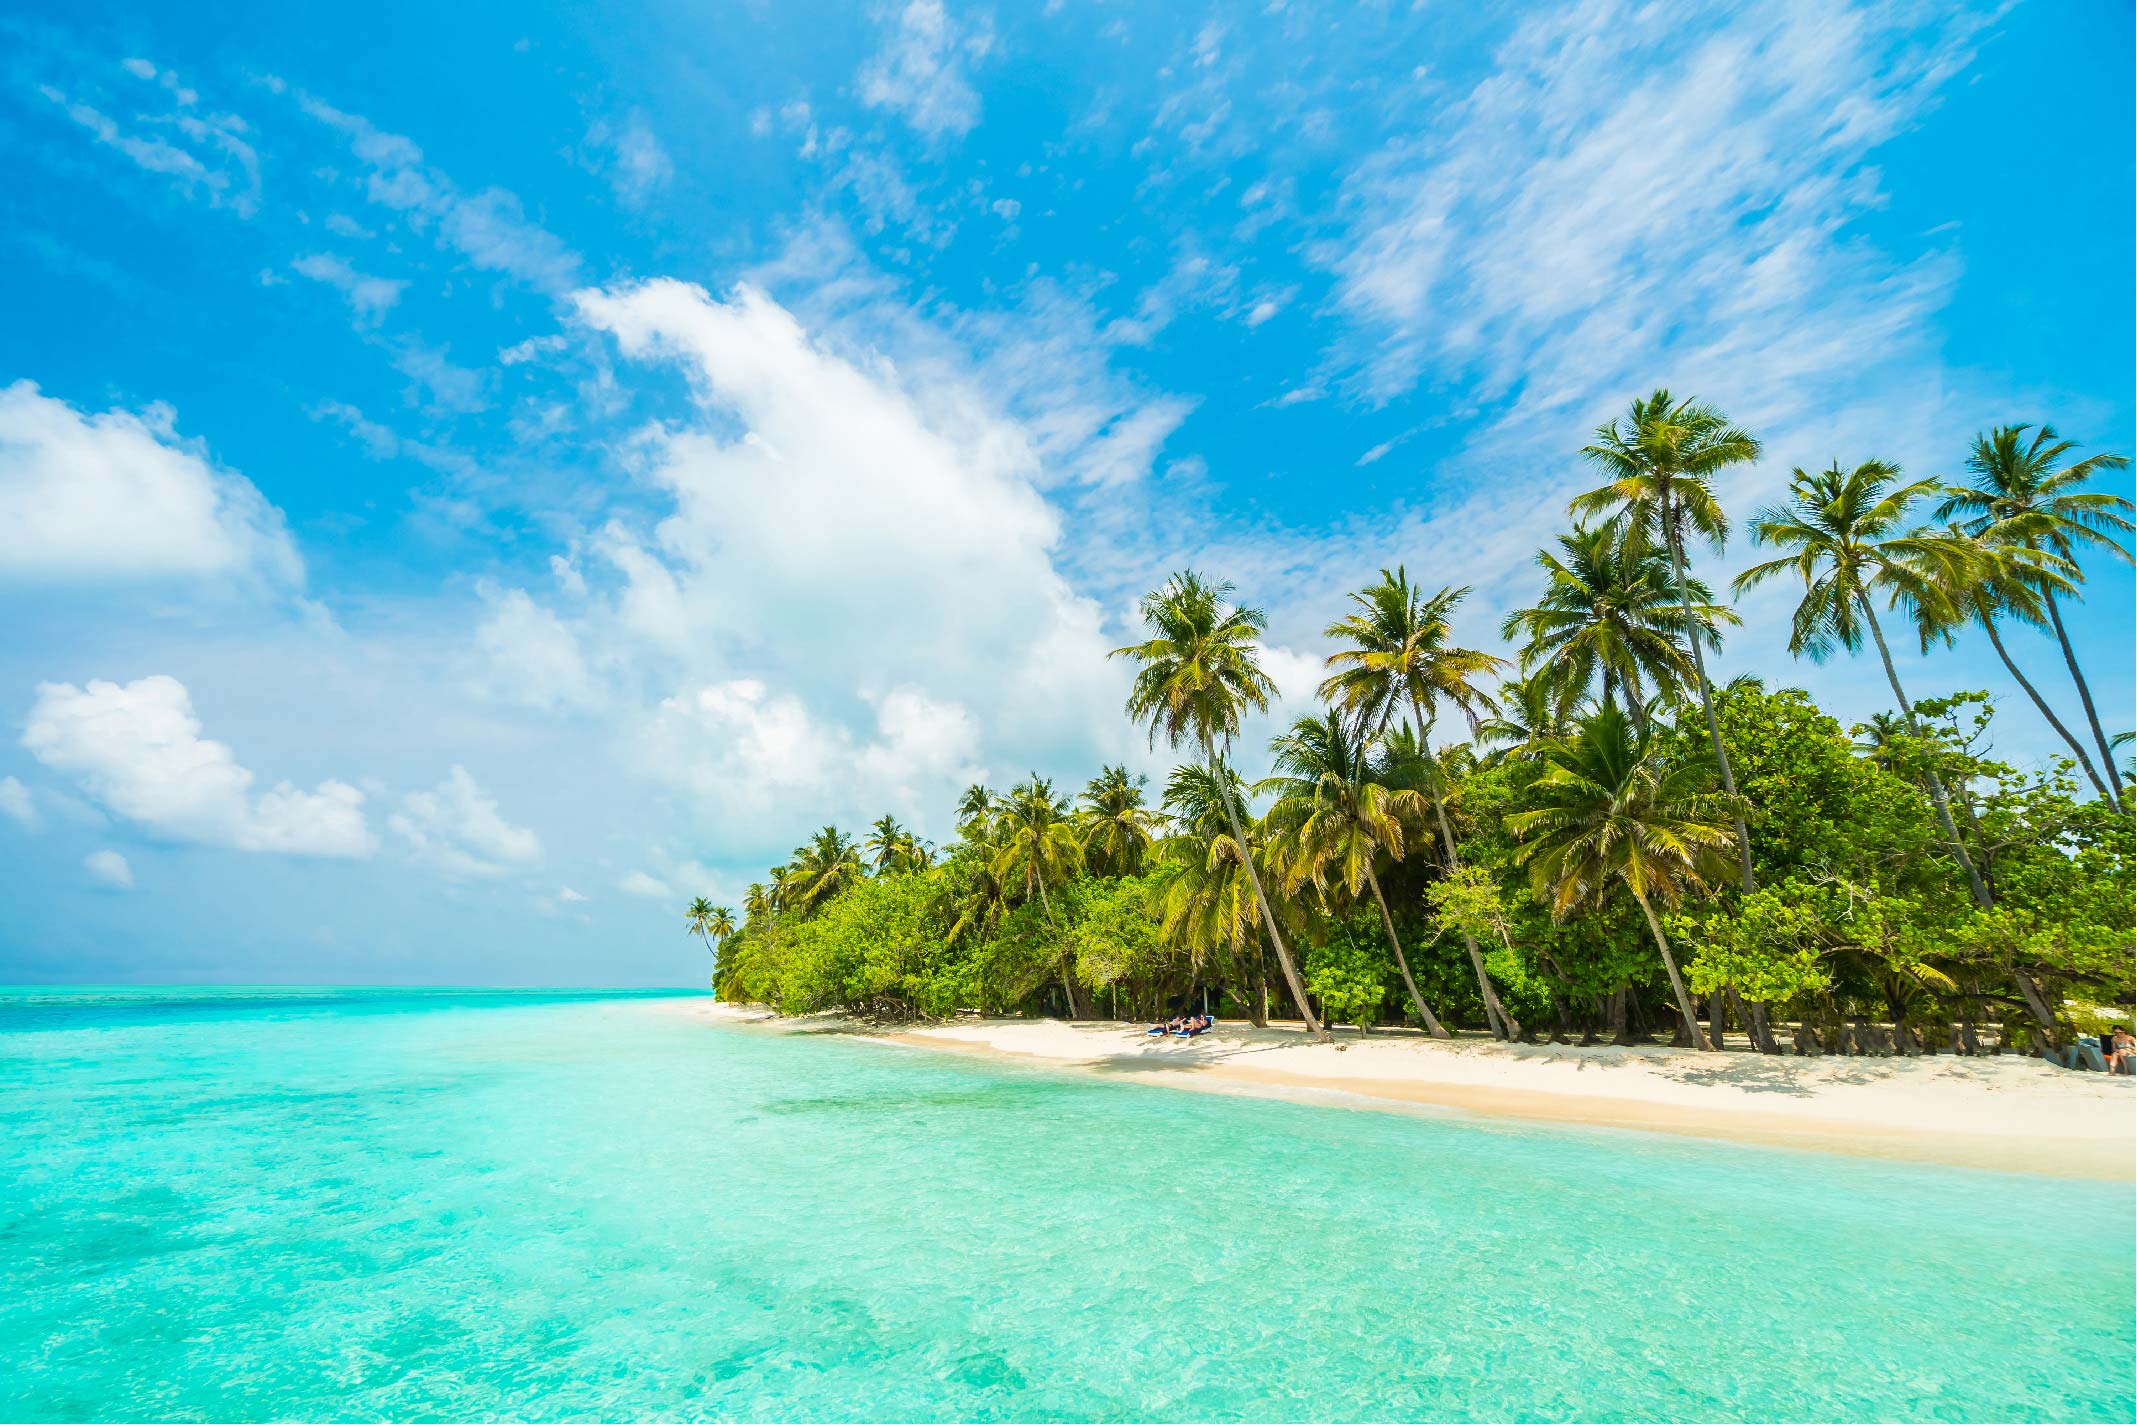 Island beach with palm treesIsland beach with palm trees